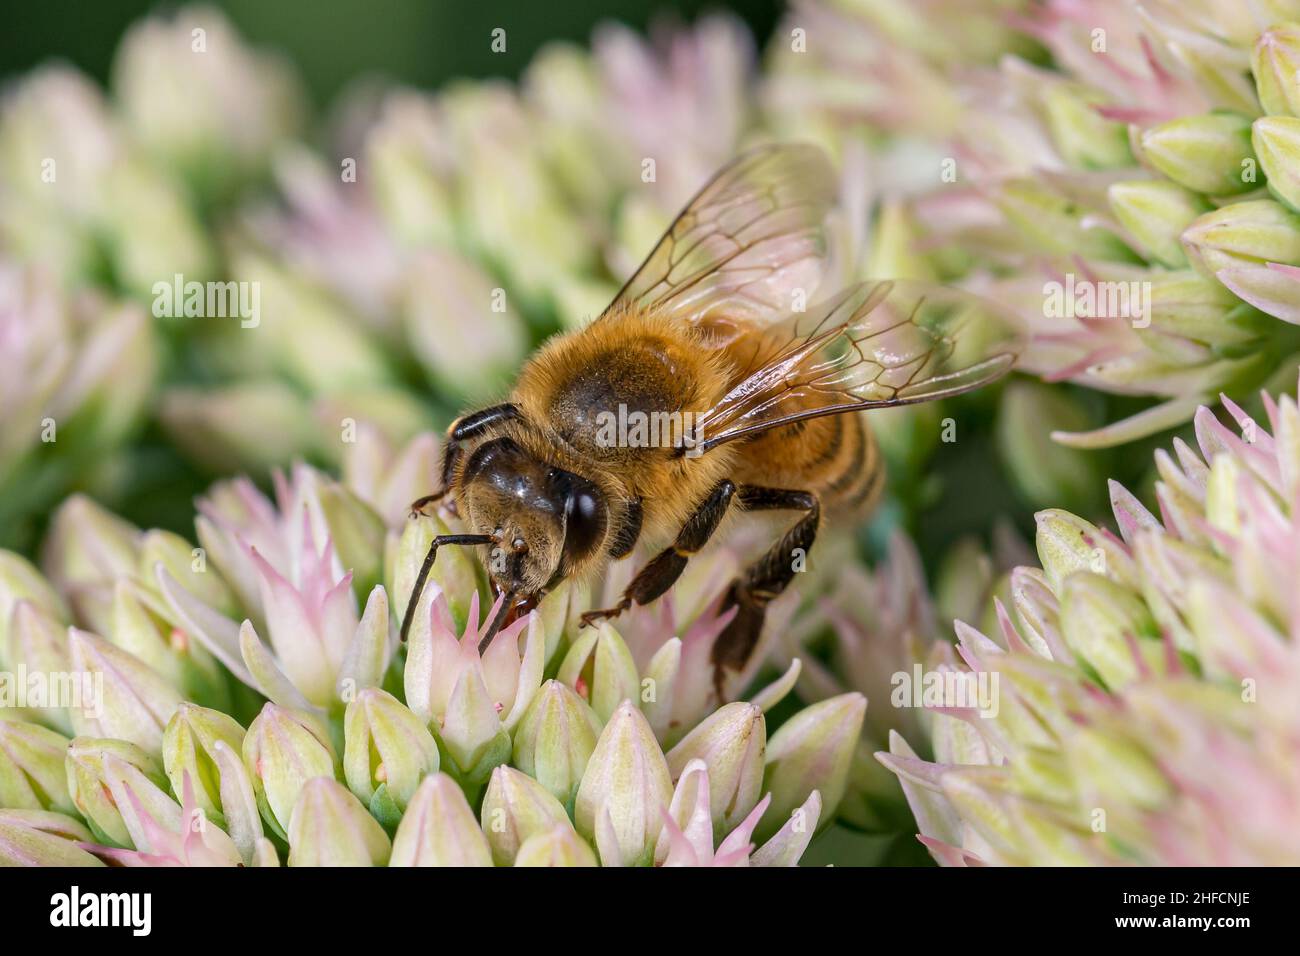 Honeybee on sedum flower. Insect and wildlife conservation, habitat preservation, and backyard flower garden concept Stock Photo